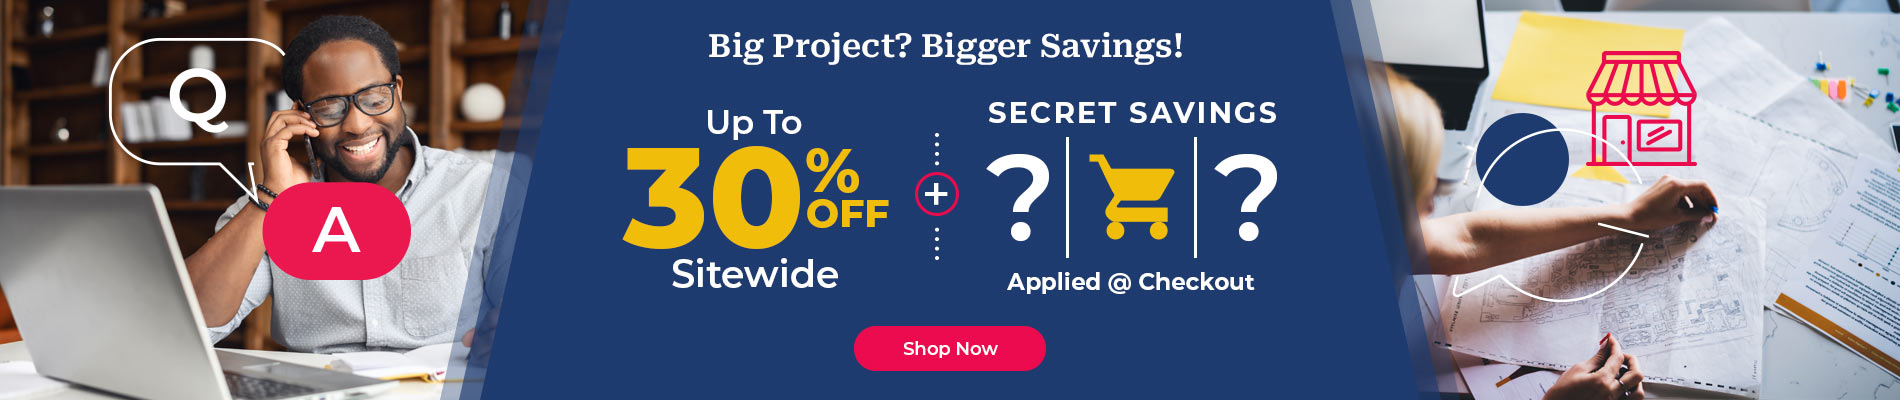 Up To 30% Off + Secret Savings!